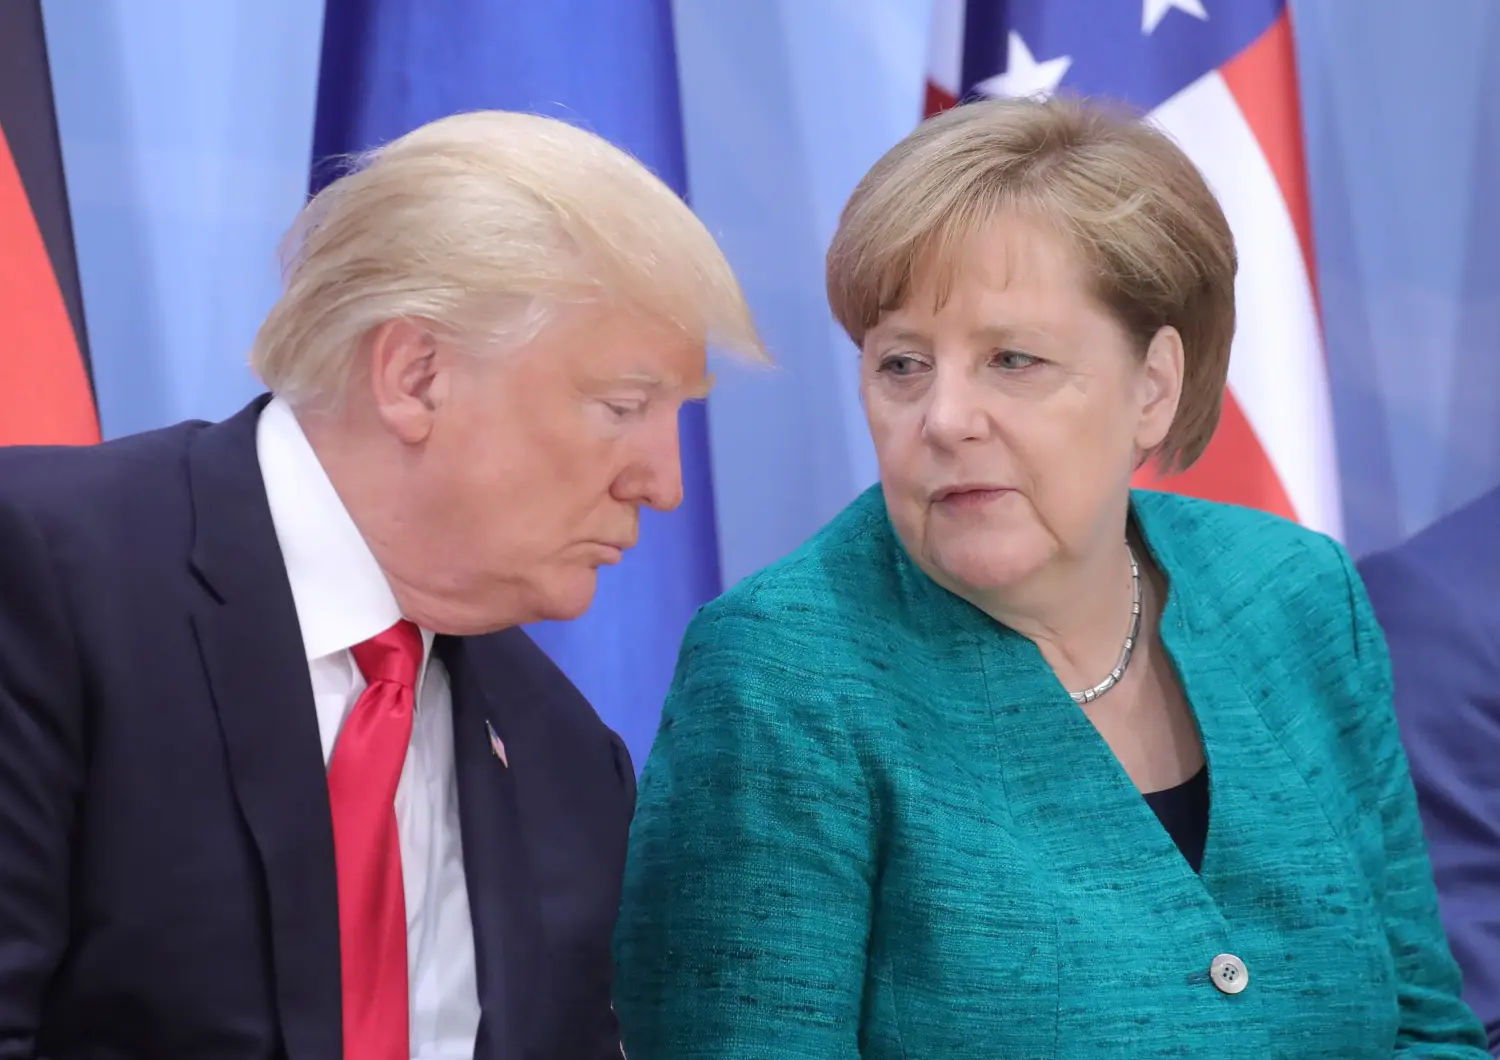 U.S. President Donald Trump and German Chancellor Angela Merkel attend the Womens Entrepreneurship Finance event during the G20 leaders summit in Hamburg, Germany July 8, 2017. REUTERS/Michael Kappeler, Pool - RC1C813C67A0